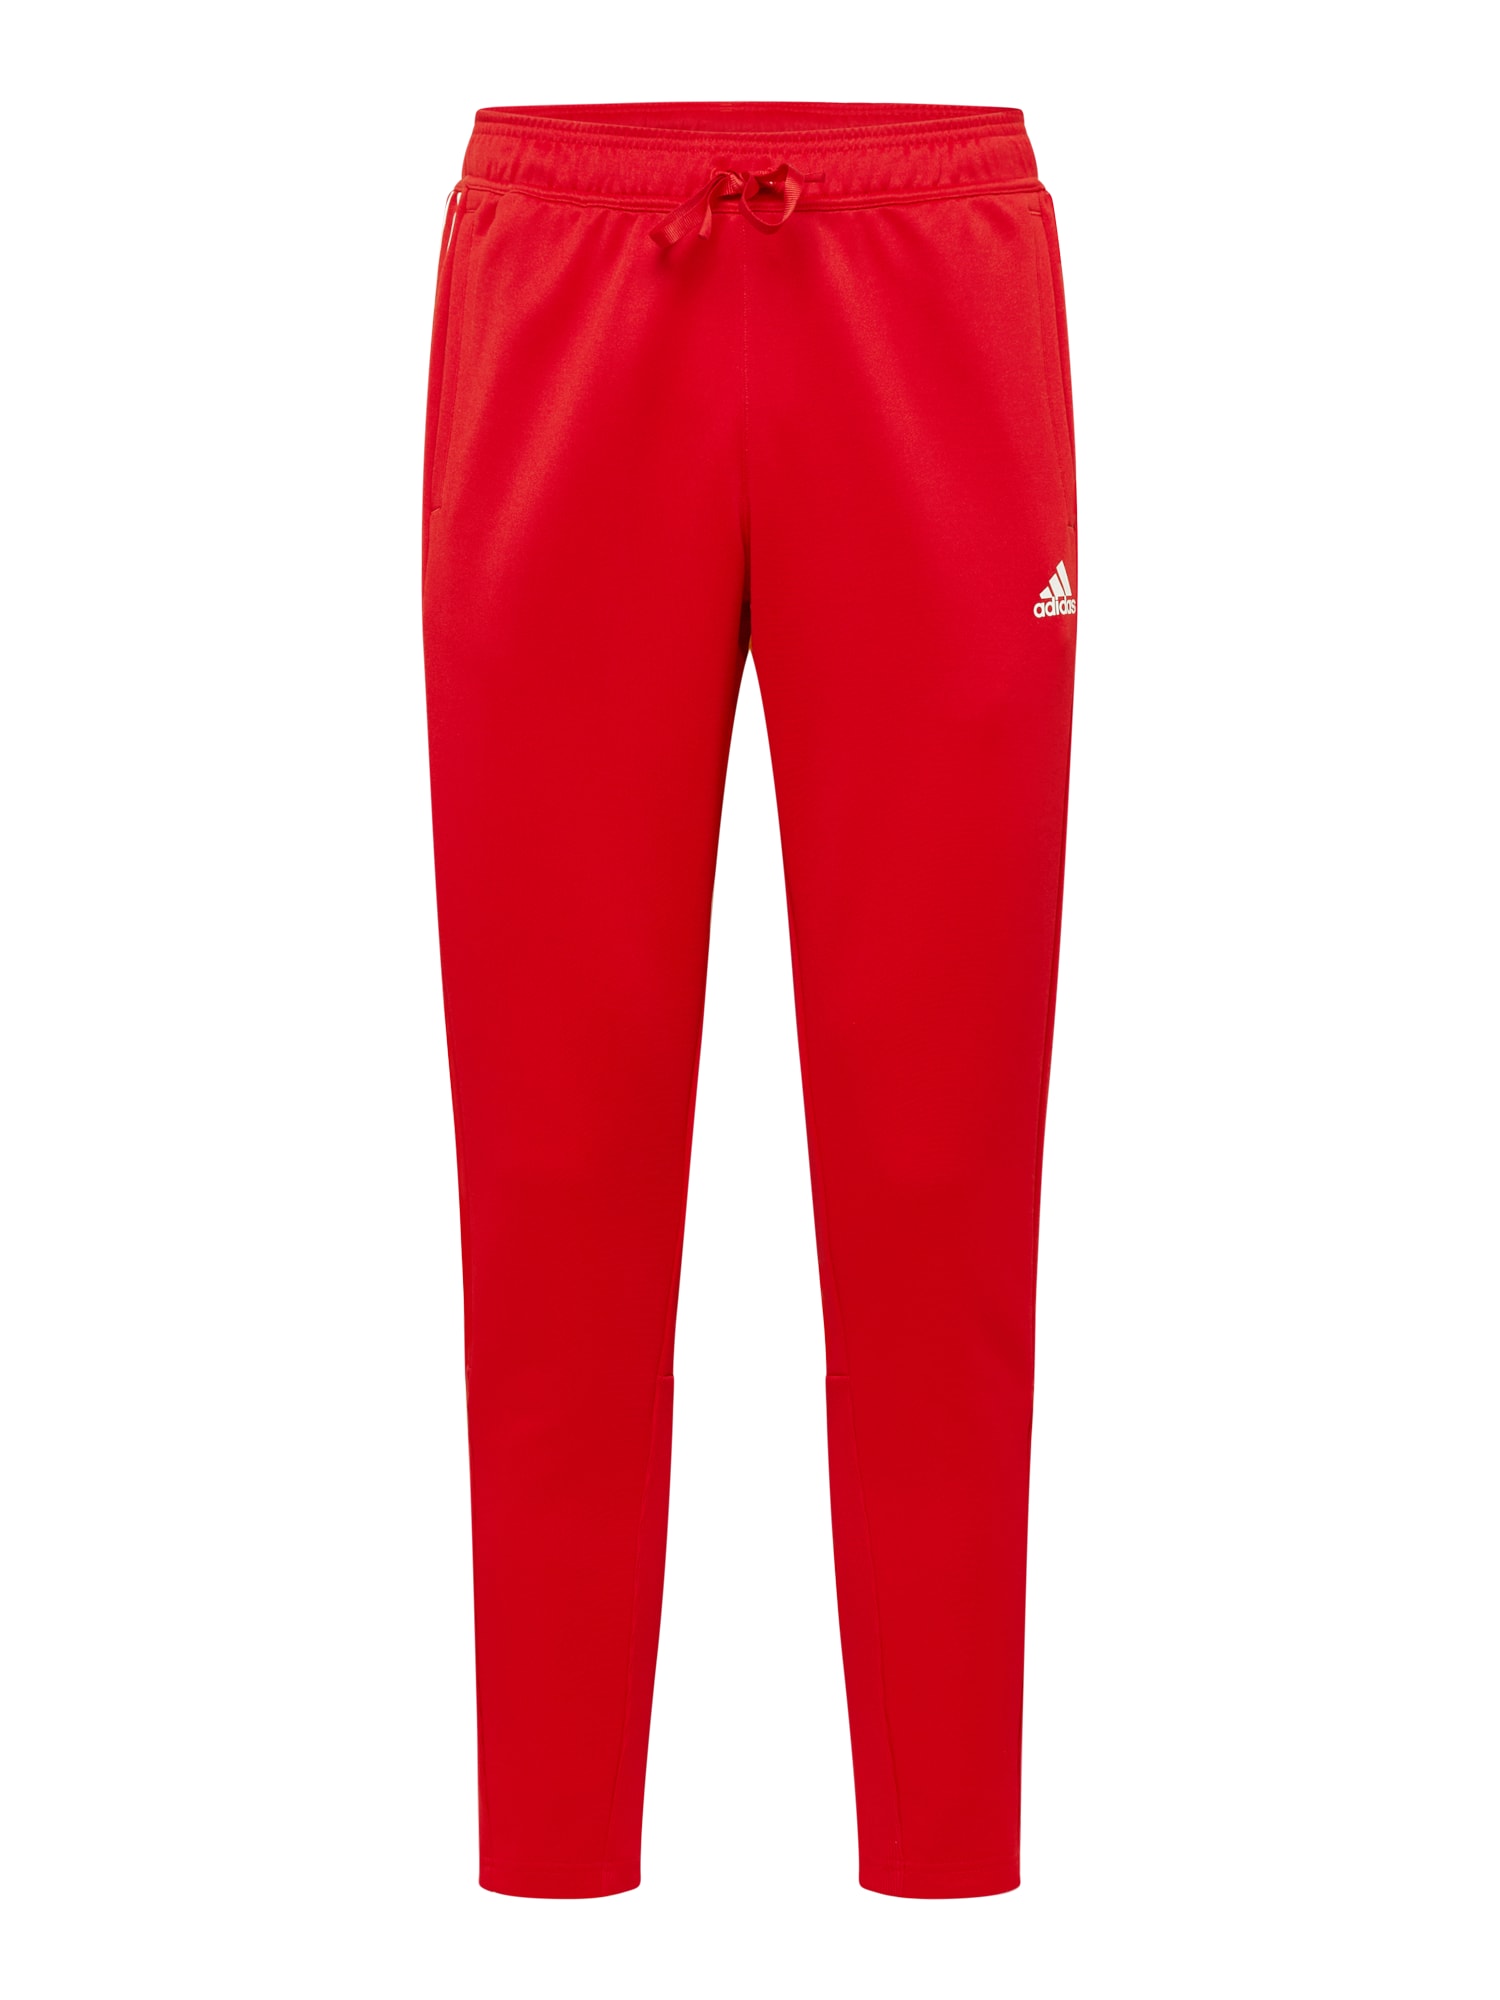 ADIDAS PERFORMANCE Športne hlače  ognjeno rdeča / bela